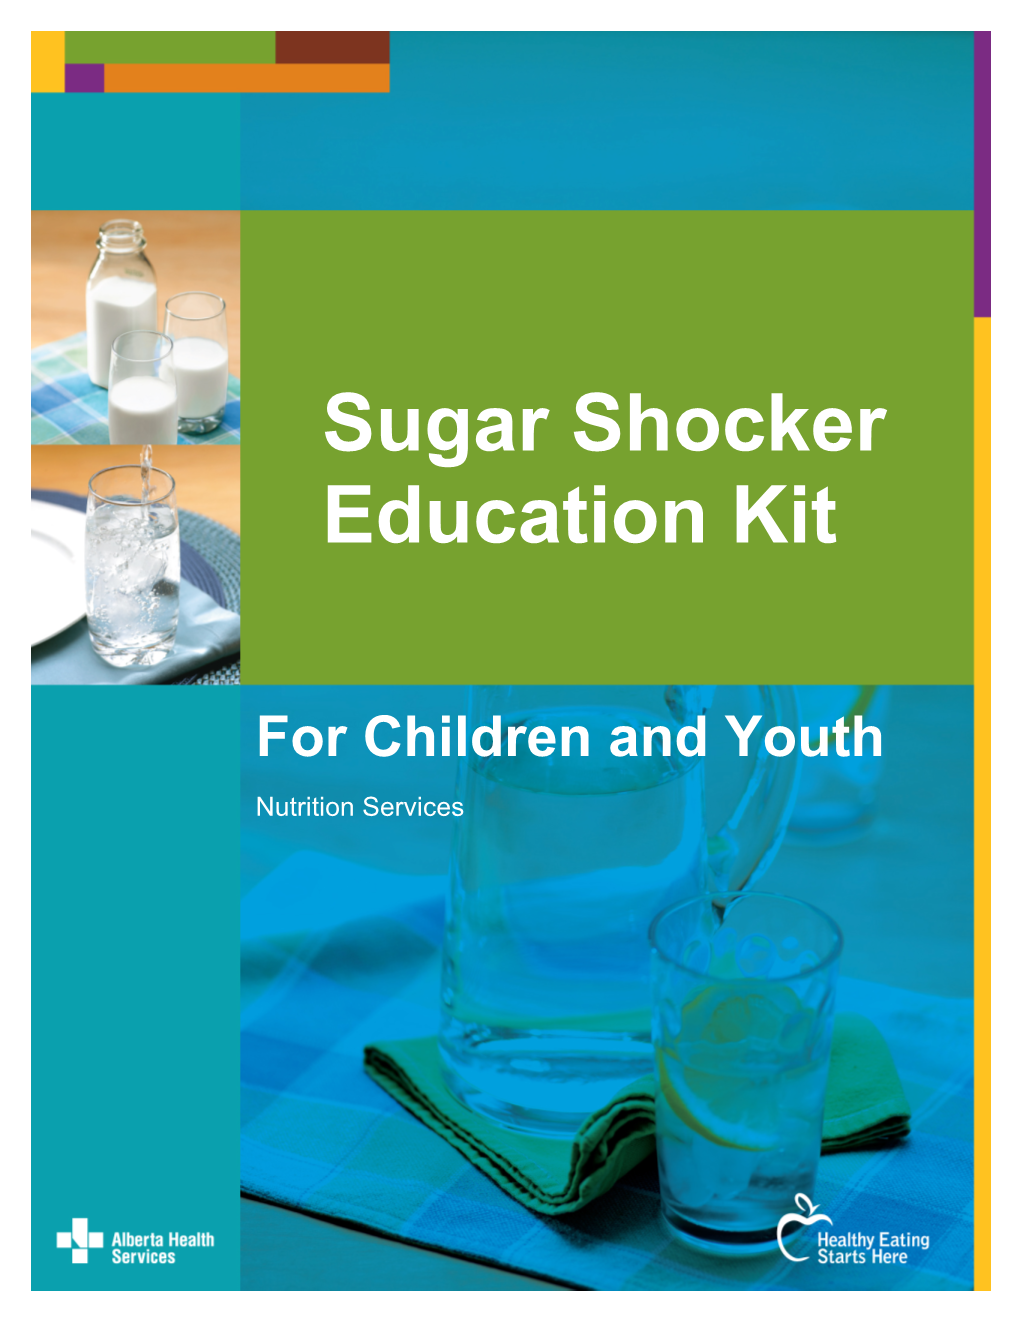 Sugar Shocker Education